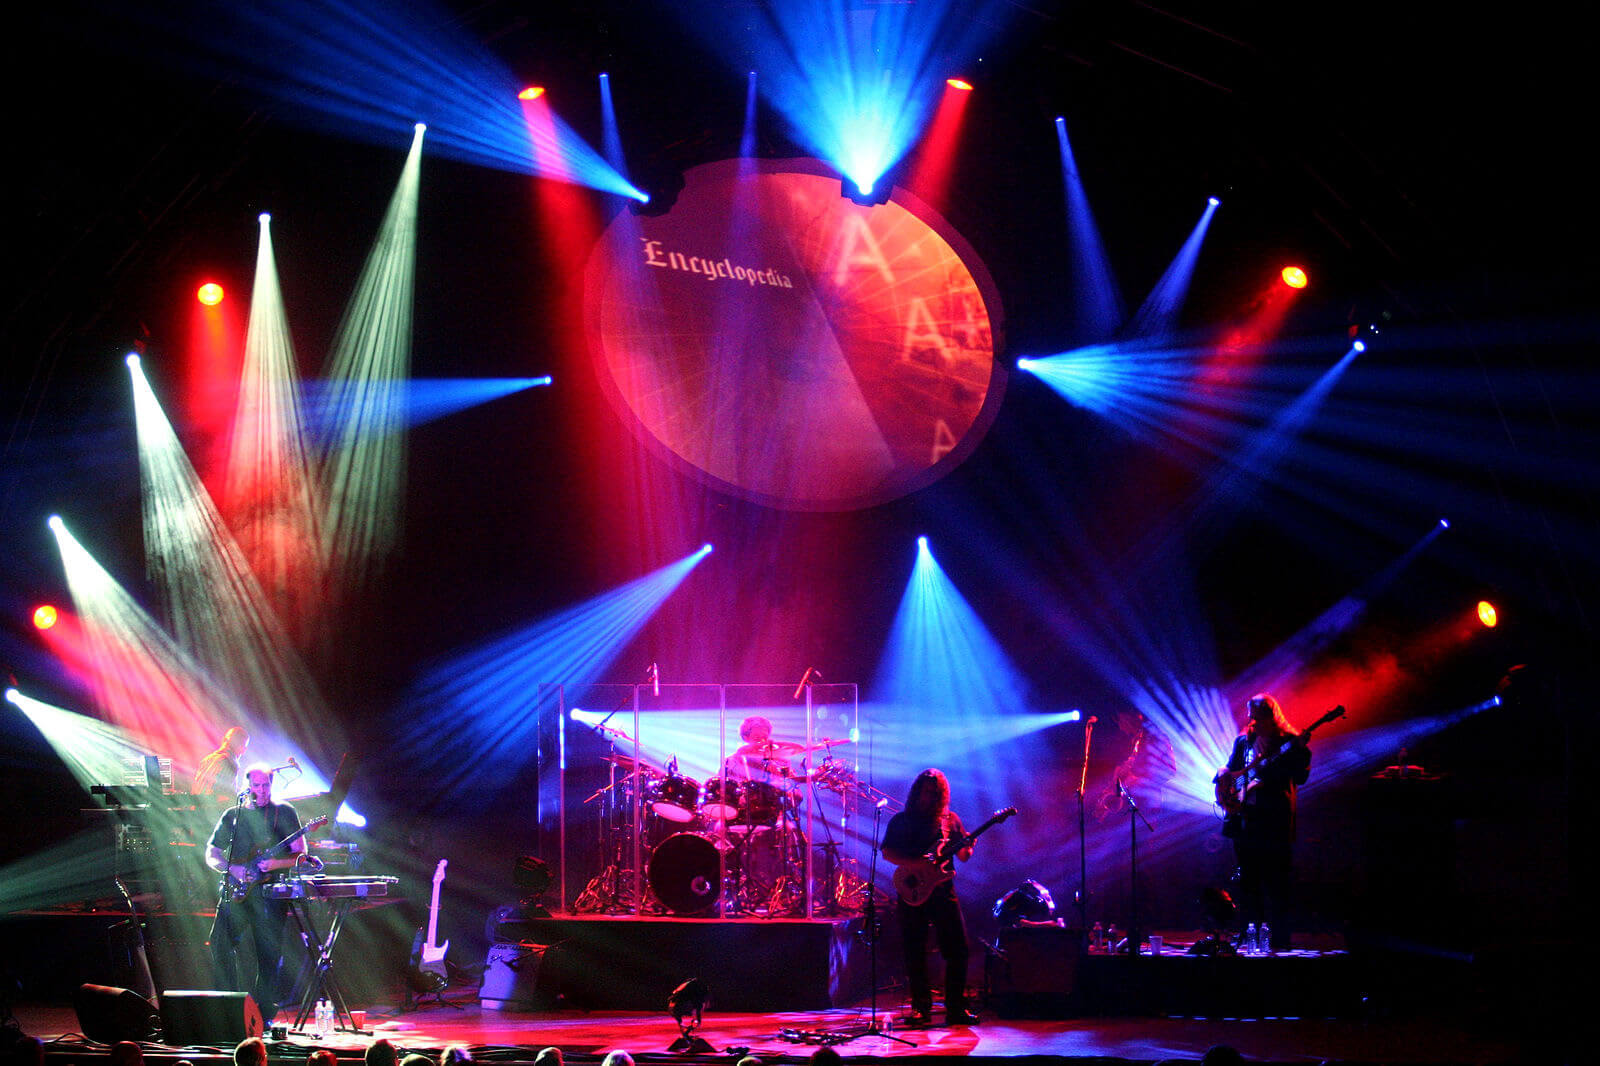 Le concert (Vianney album) - Wikipedia